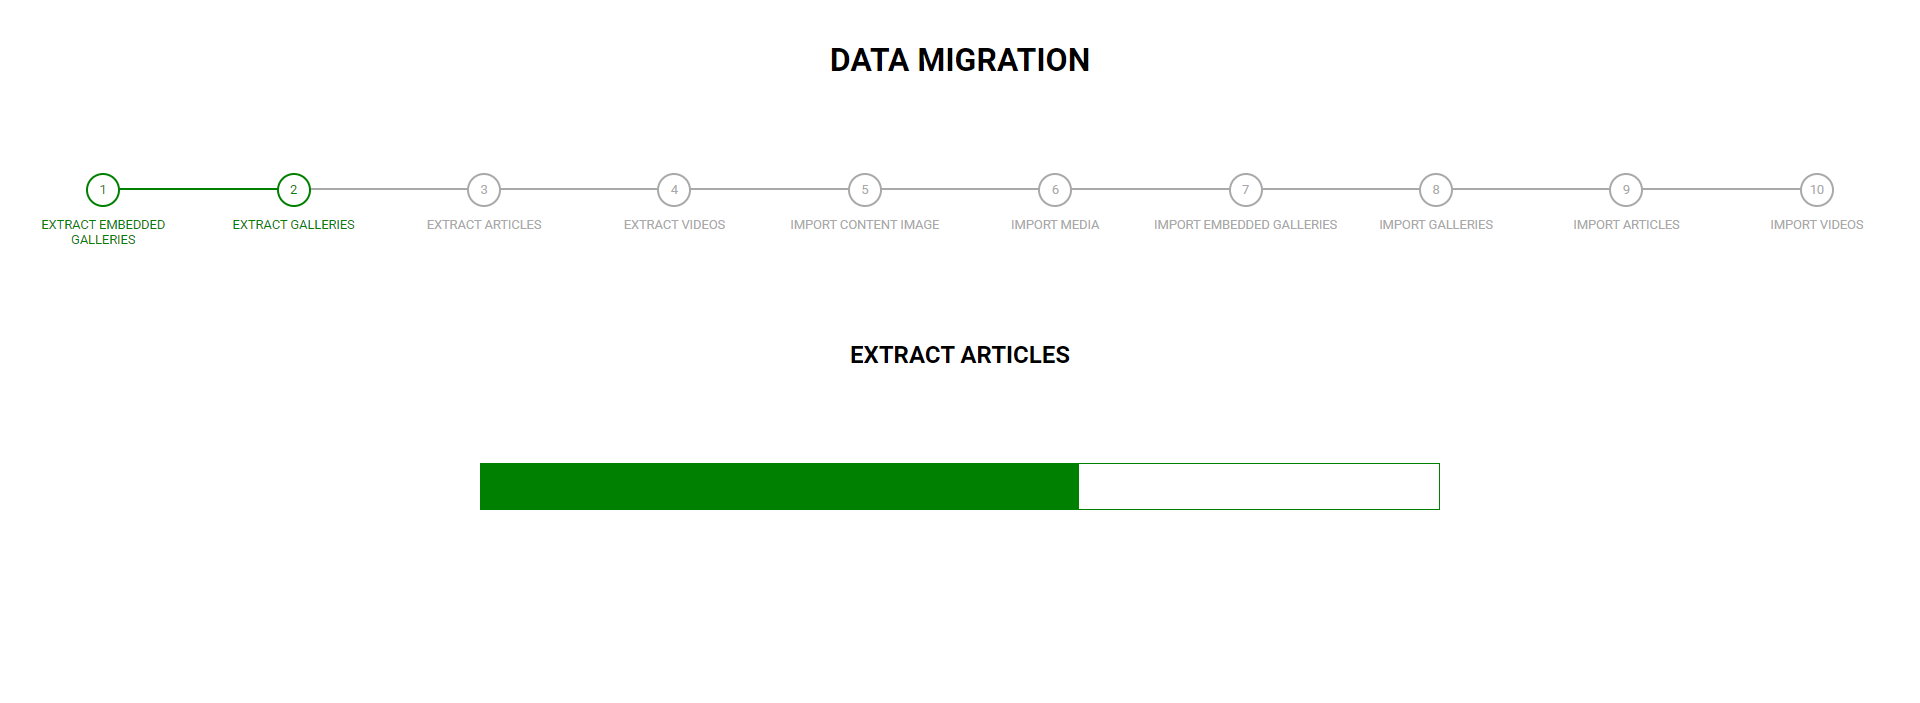 Post Mortem: Custom CLI for WordPress Data Migration - Image 1